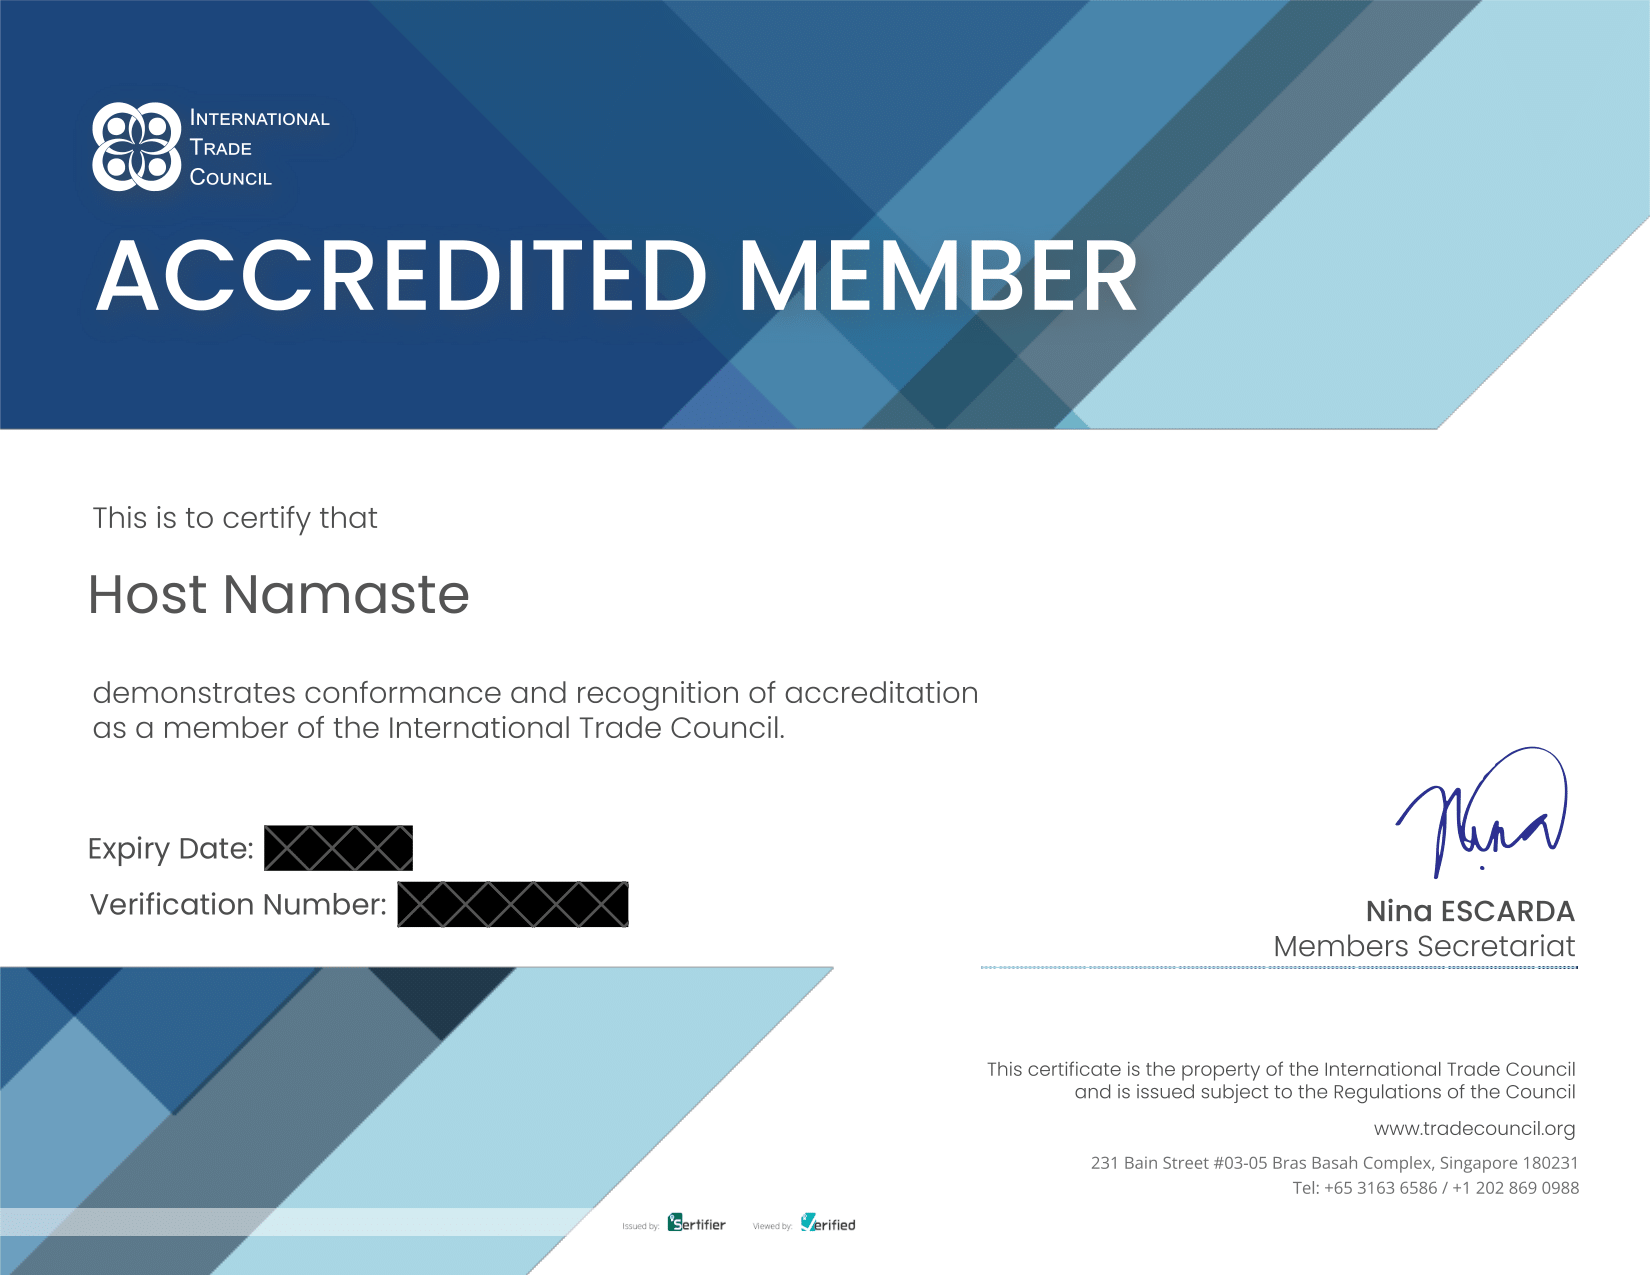 HostNamaste Accredited Member Of International Trade Council (ITC)